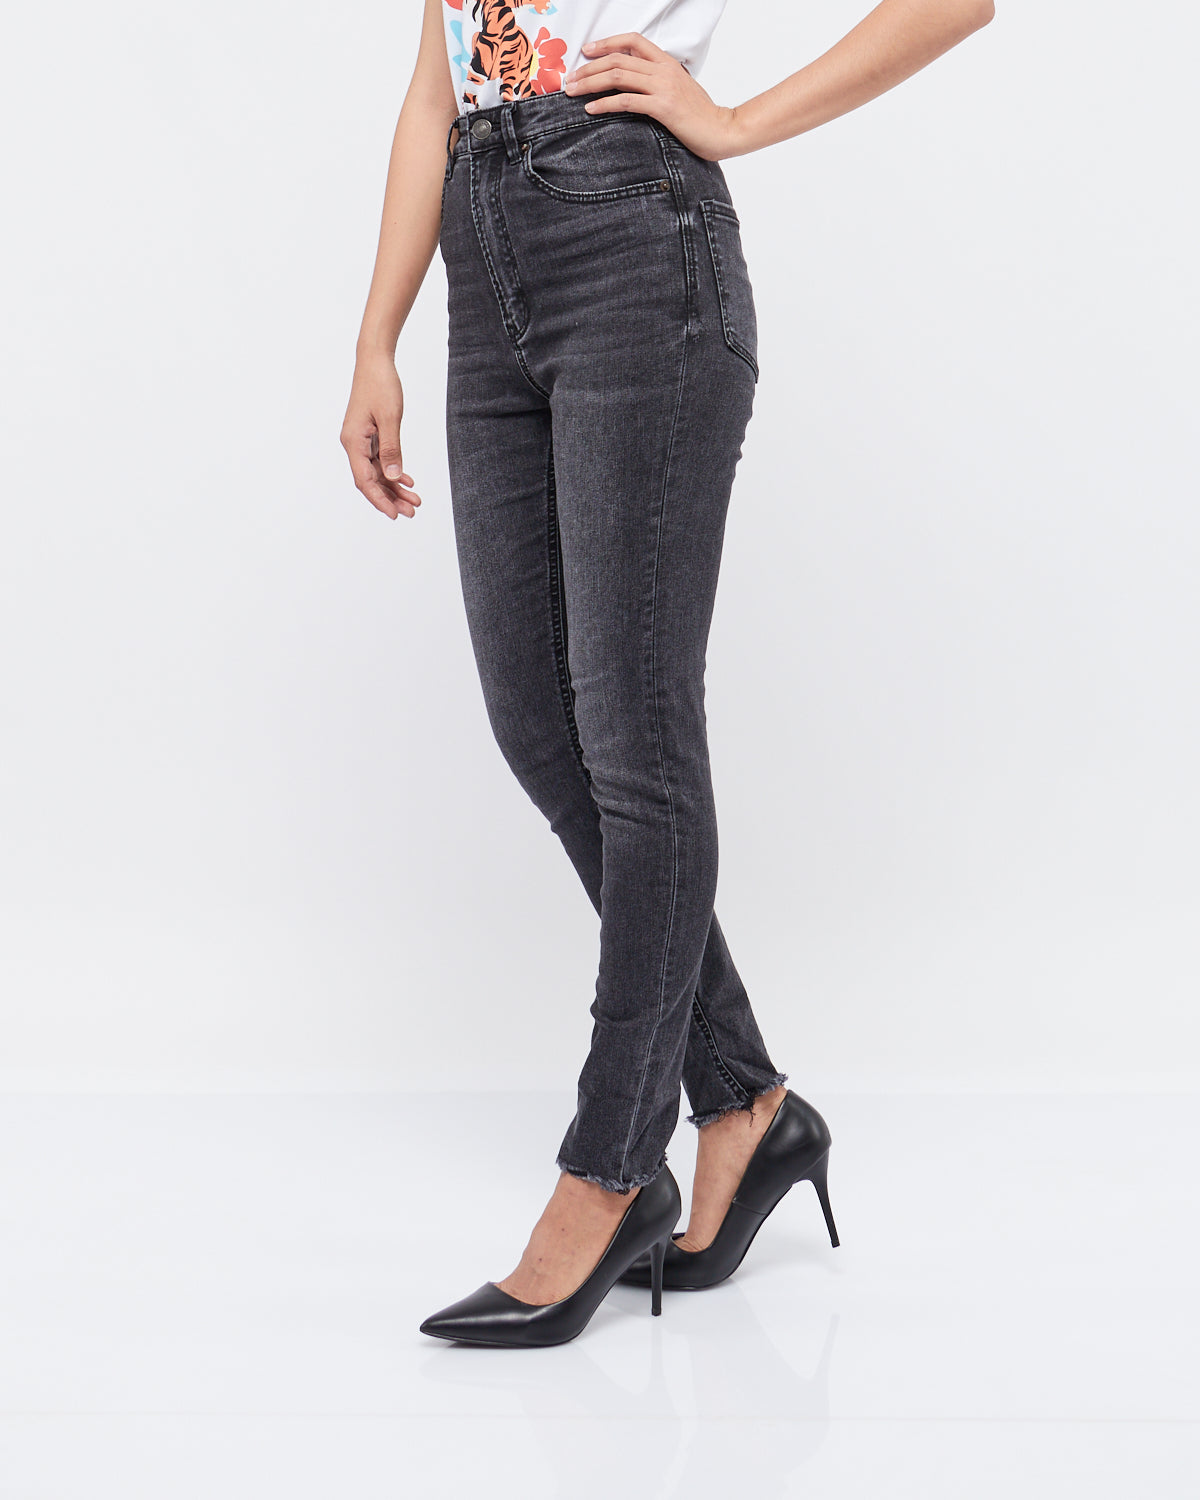 High Waist Slim Fit Lady Jeans  16.90